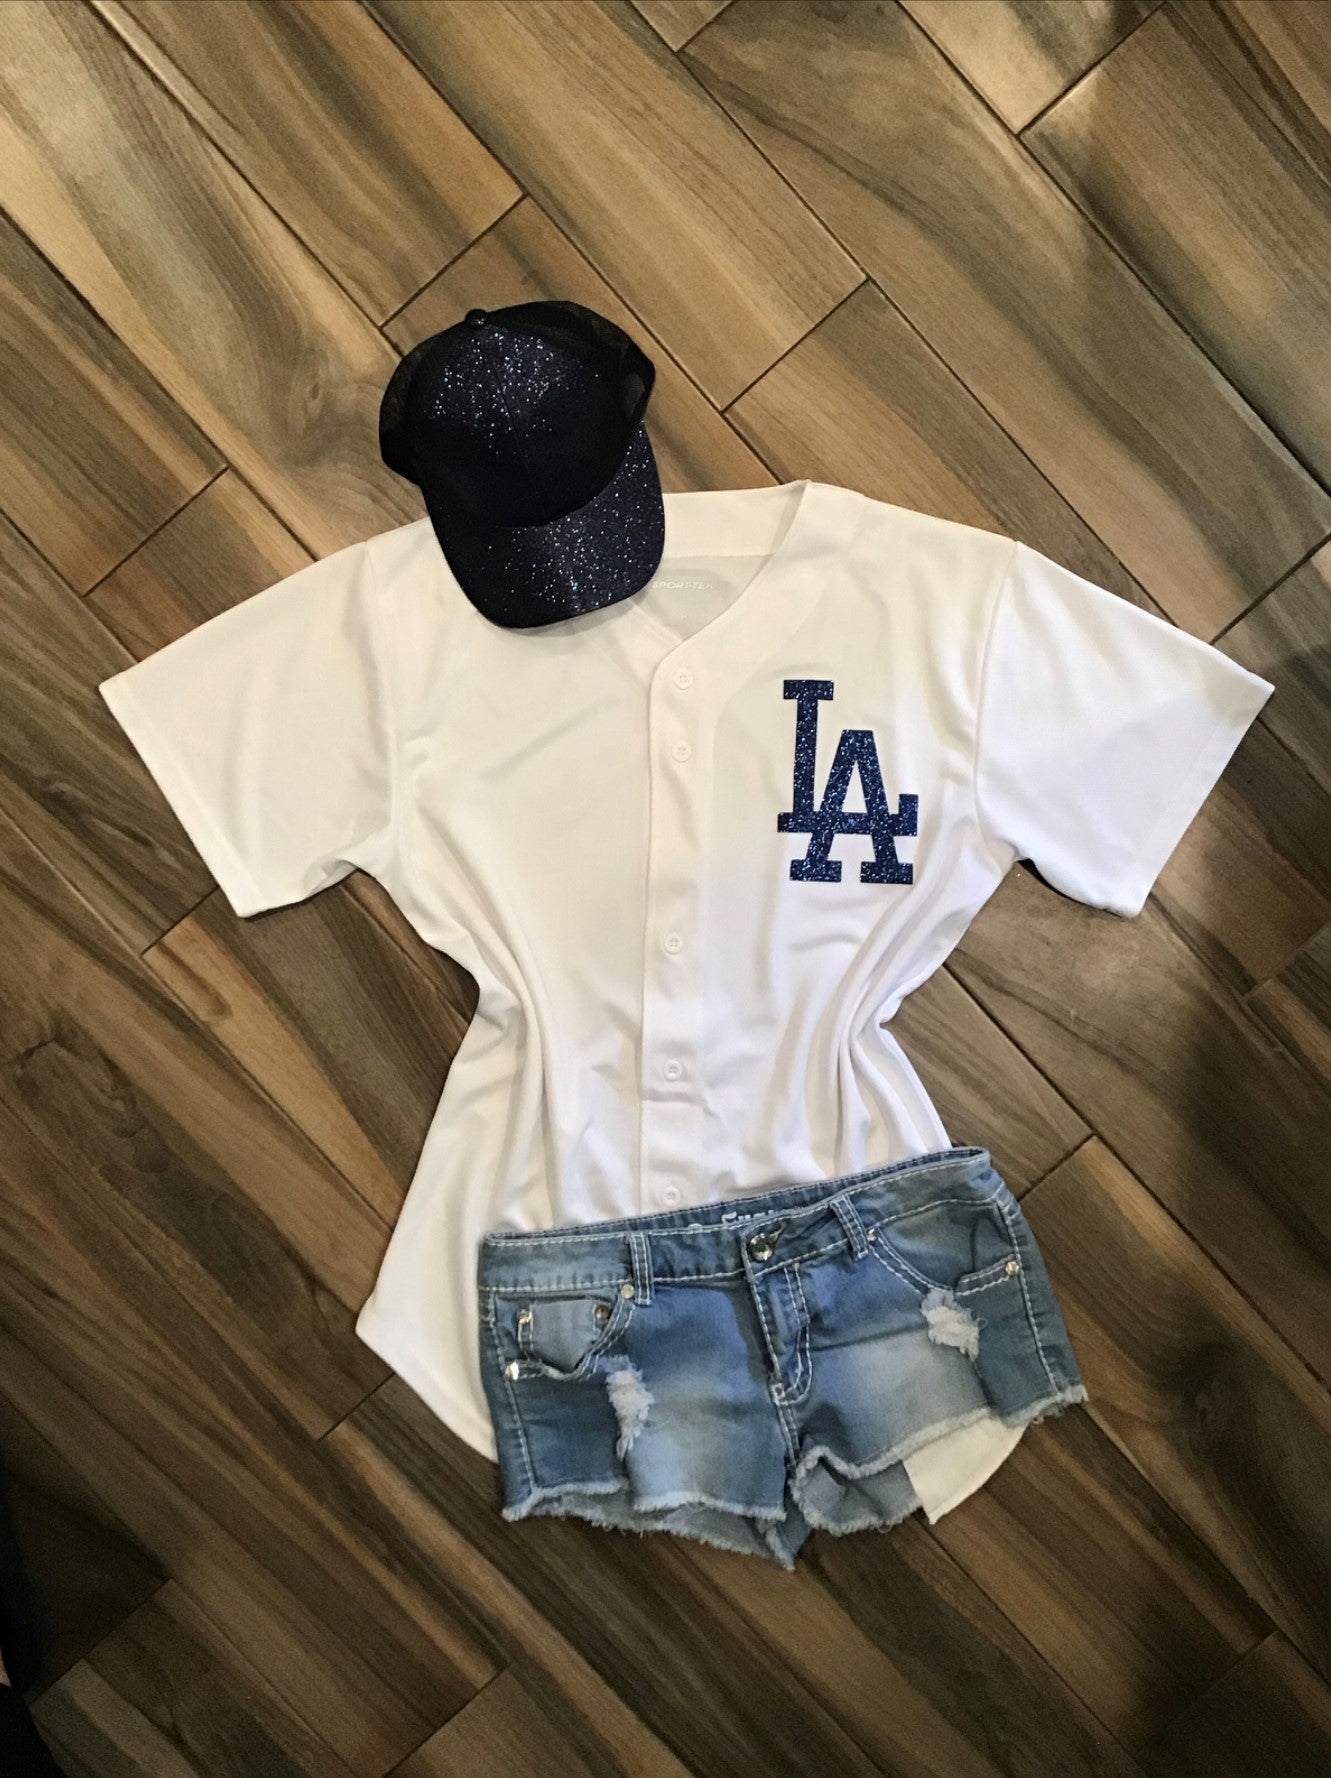 LA Dodgers Inspired Baseball Jersey - White